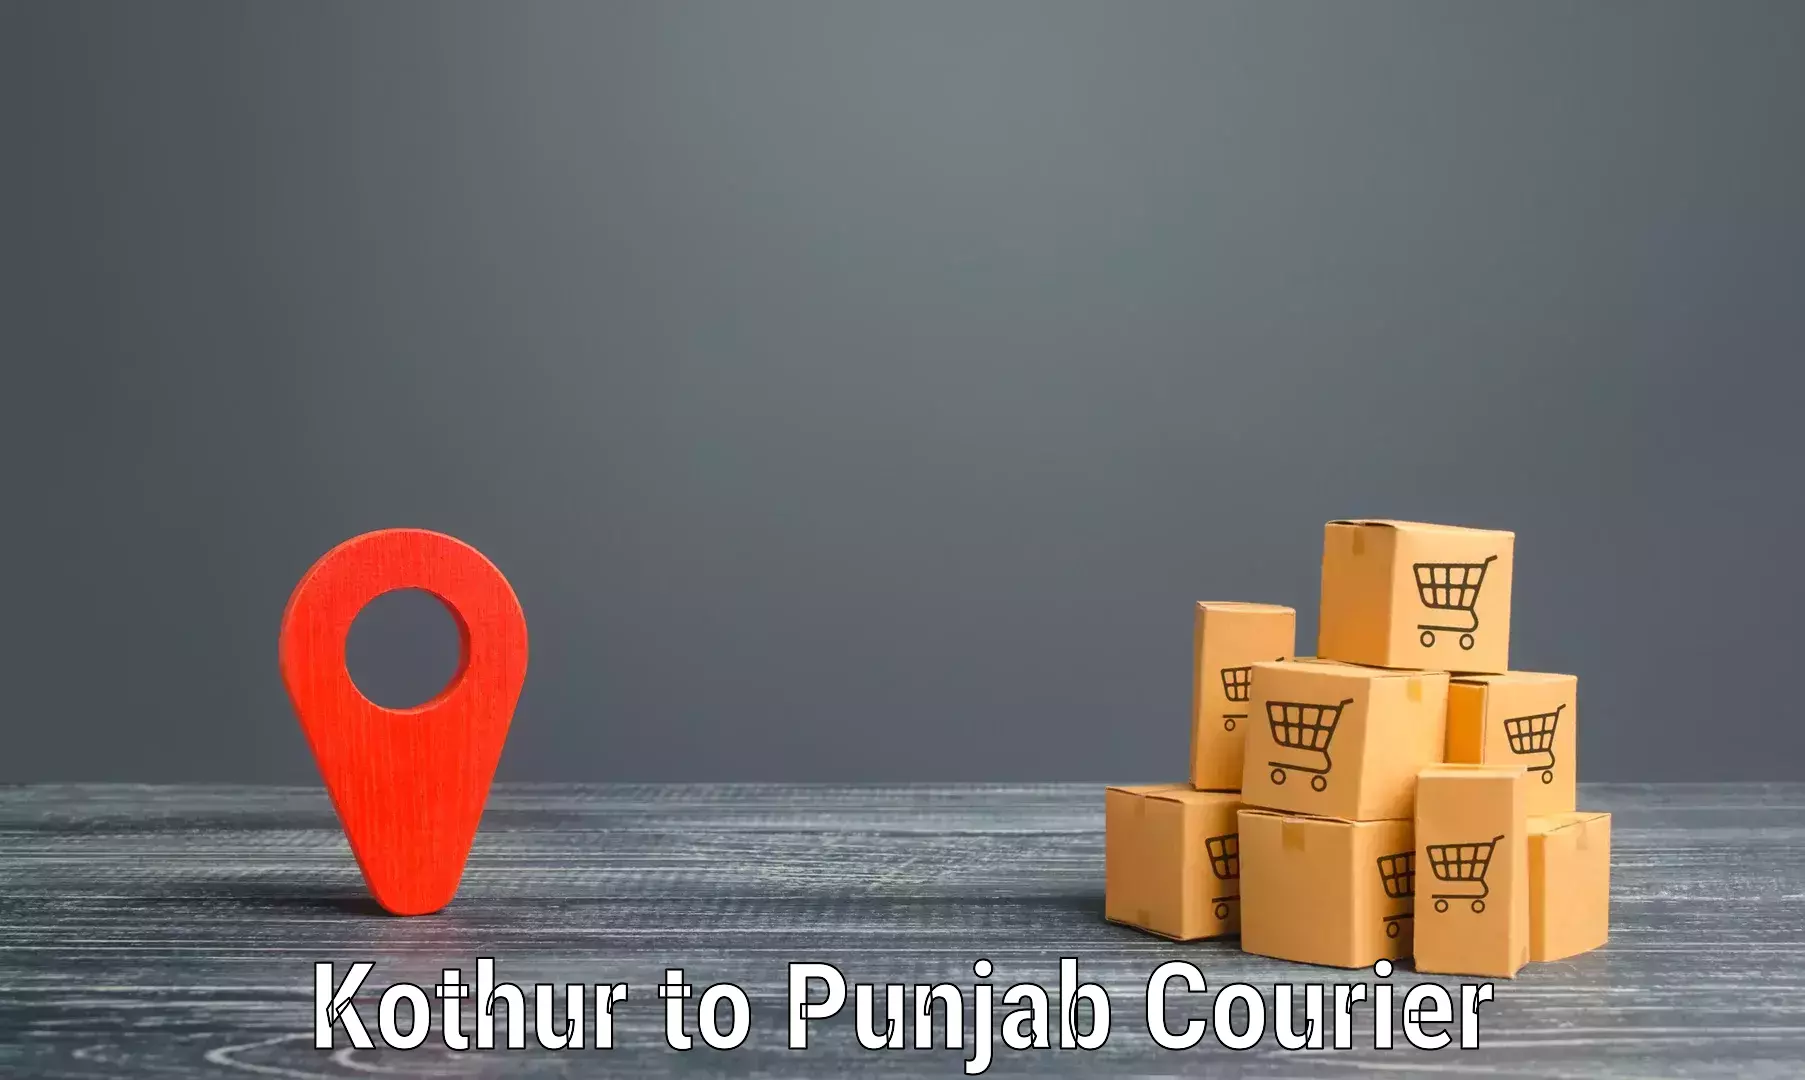 Global freight services Kothur to Punjab